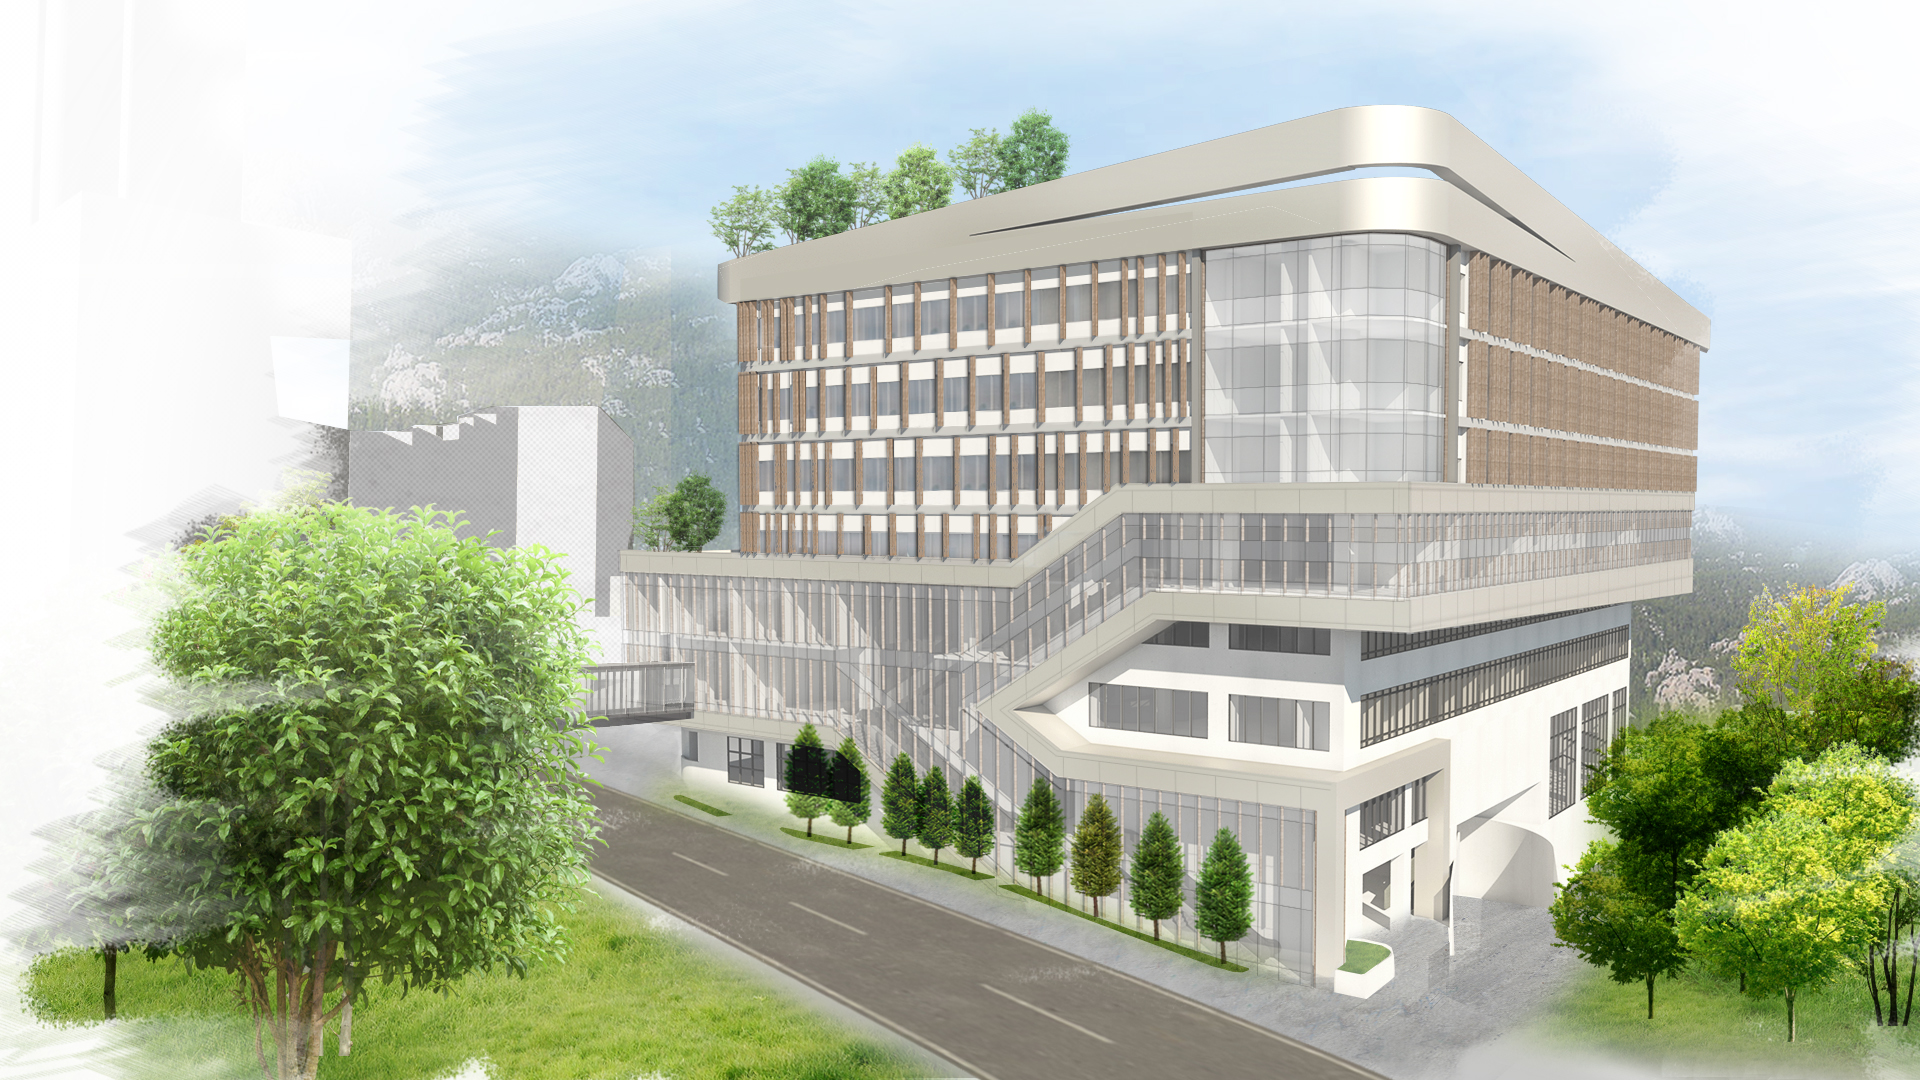 Concept art of HKU medical campus development.